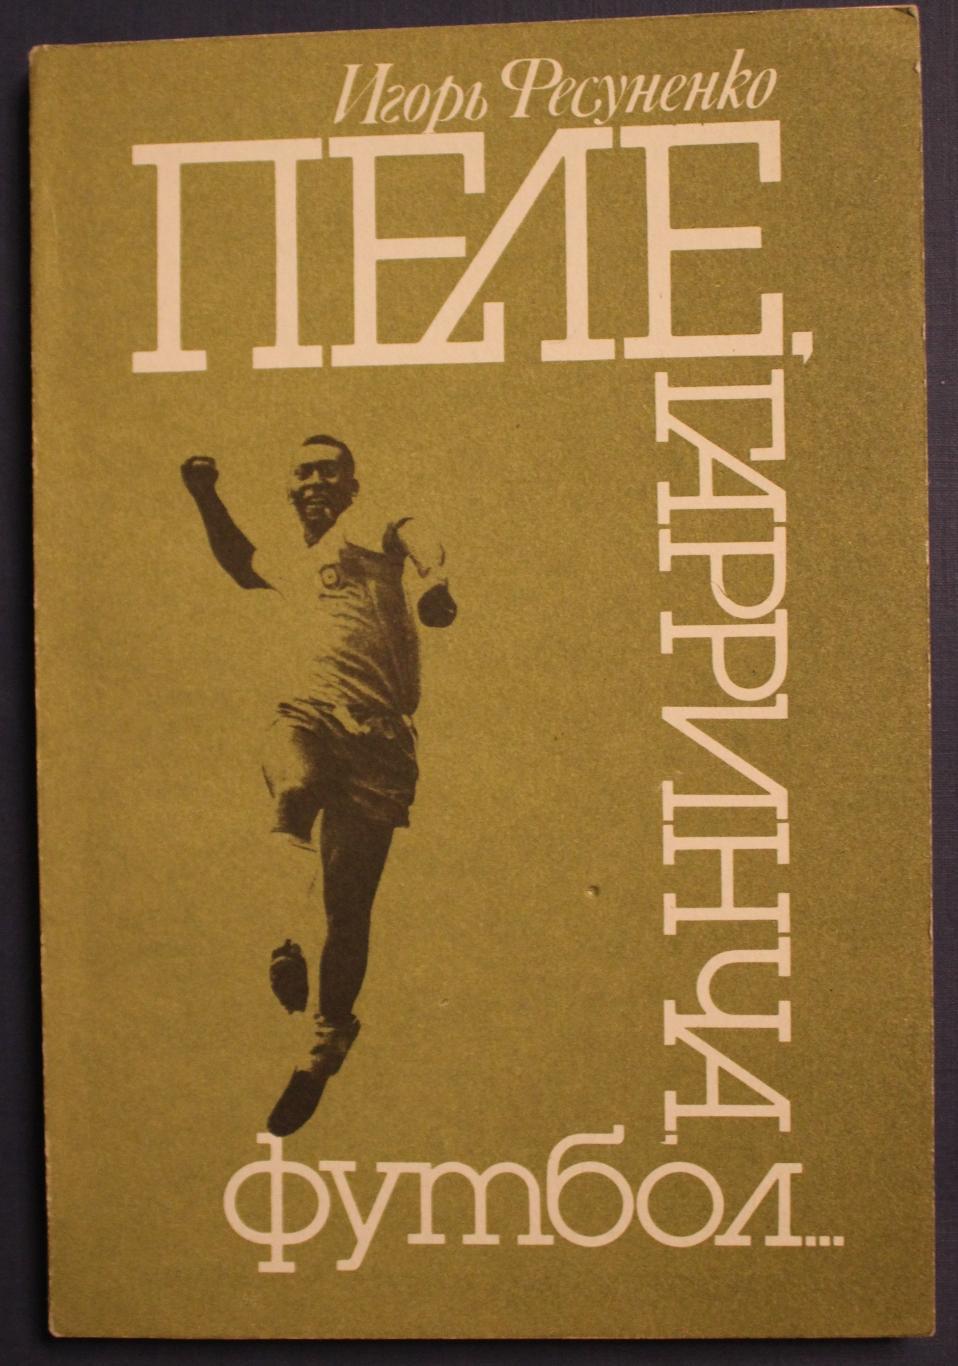 Игорь Фесуненко Пеле, Гарринча, футбол... 1990